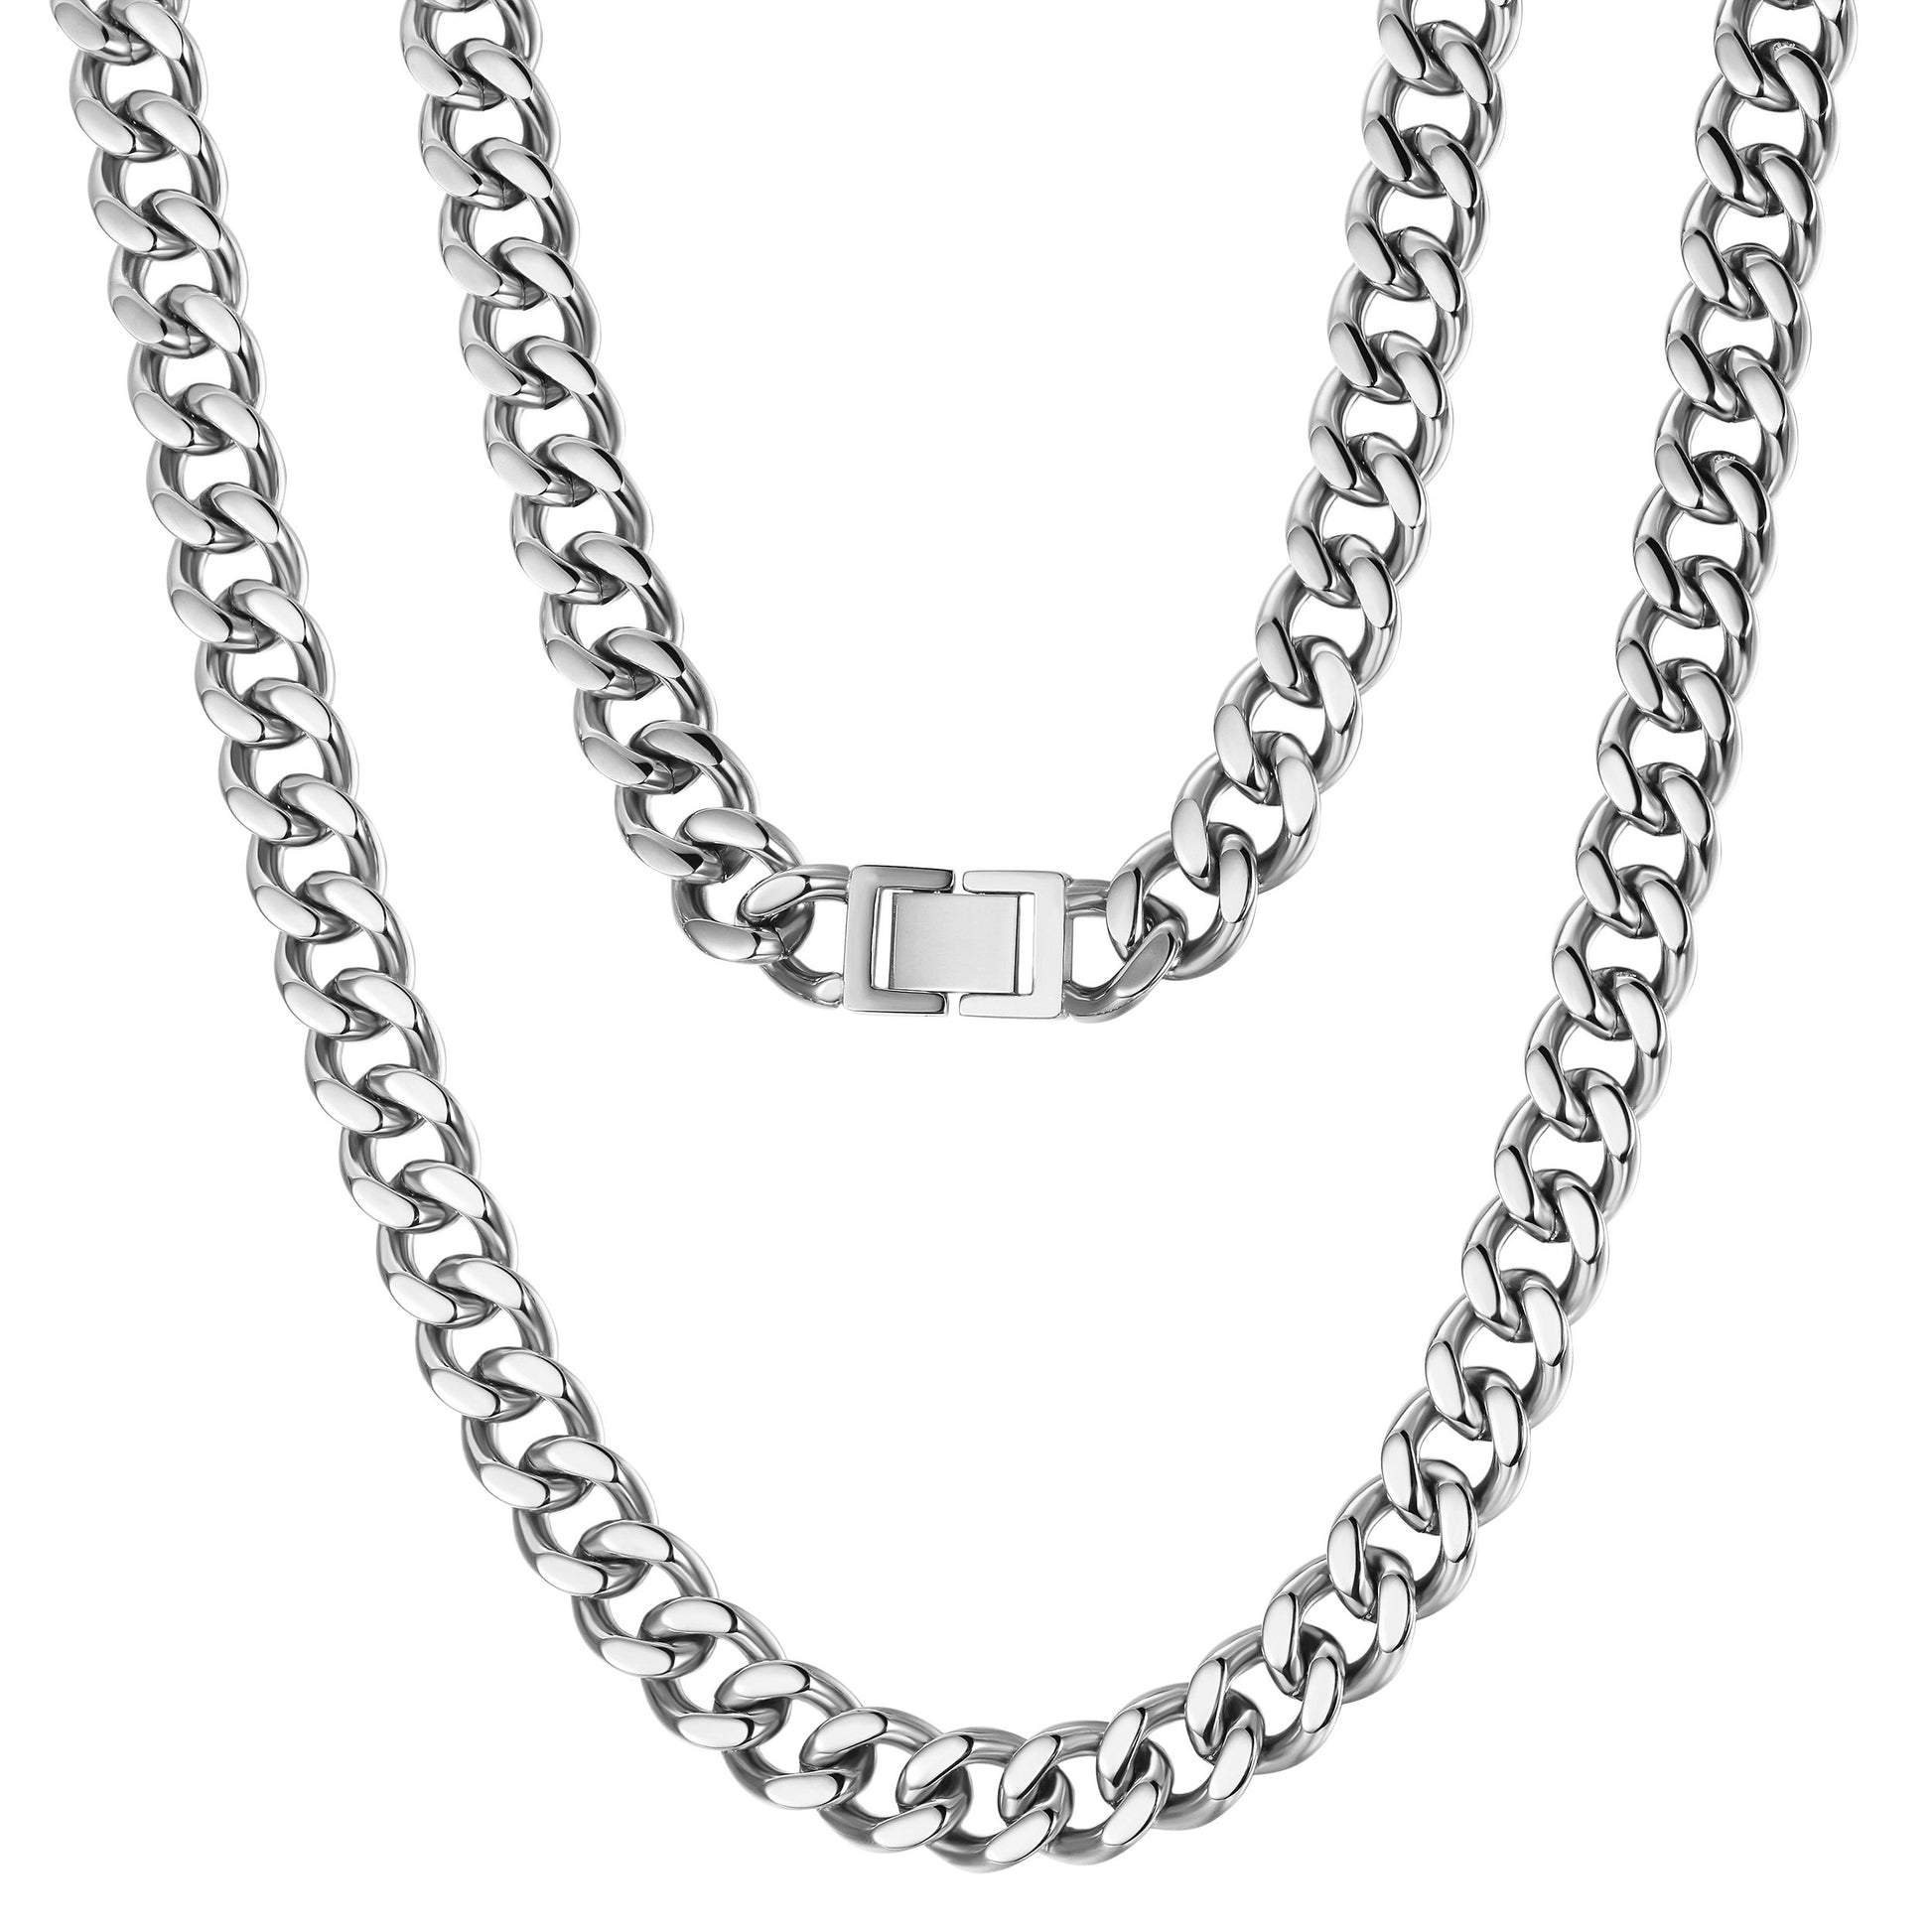 12mm Silver Hip Hop Cuban Chain Necklace - Walbiz.com